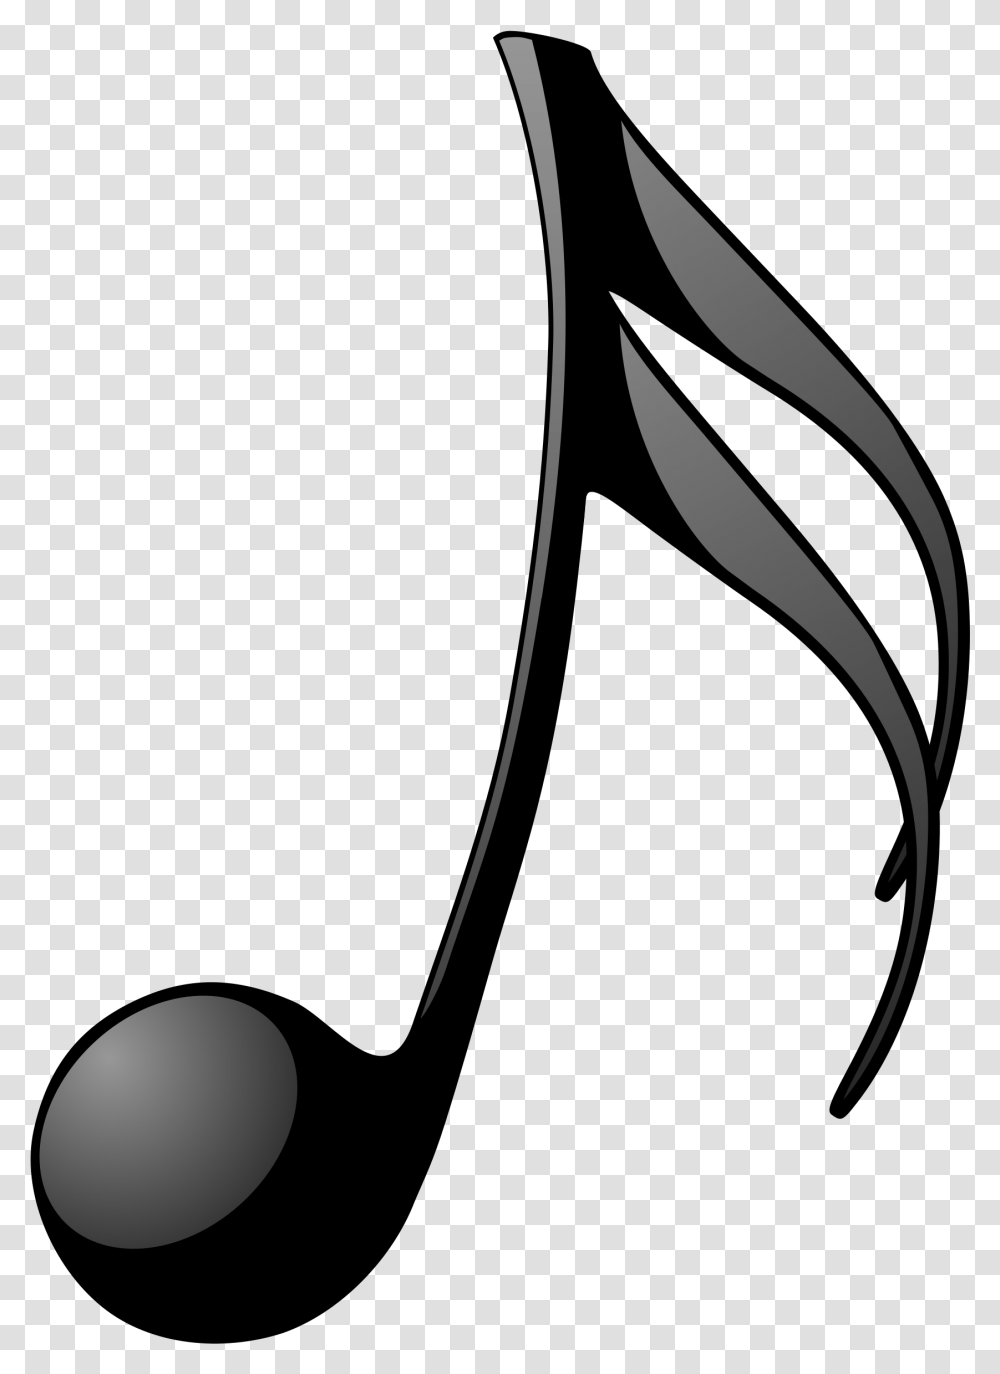 Music Notes Note Music Quaver Vector Graphic Pixabay Music Note Pdf, Floral Design Transparent Png